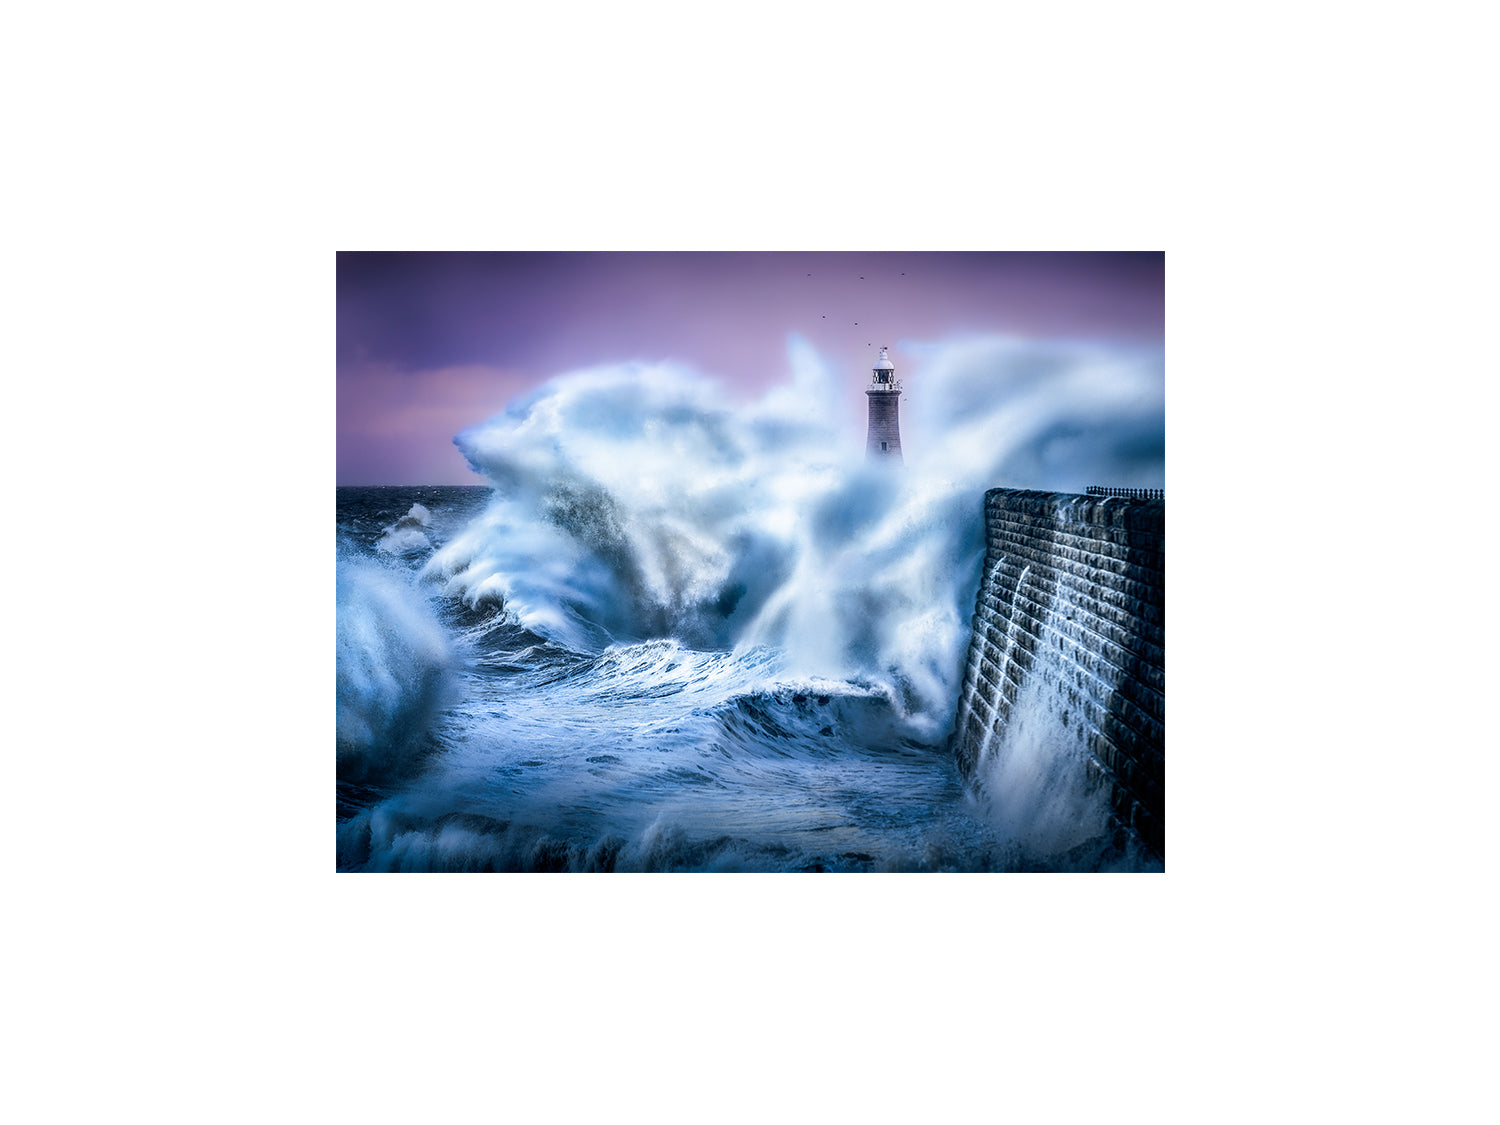 Tynemouth Lighthouse's "Fury"